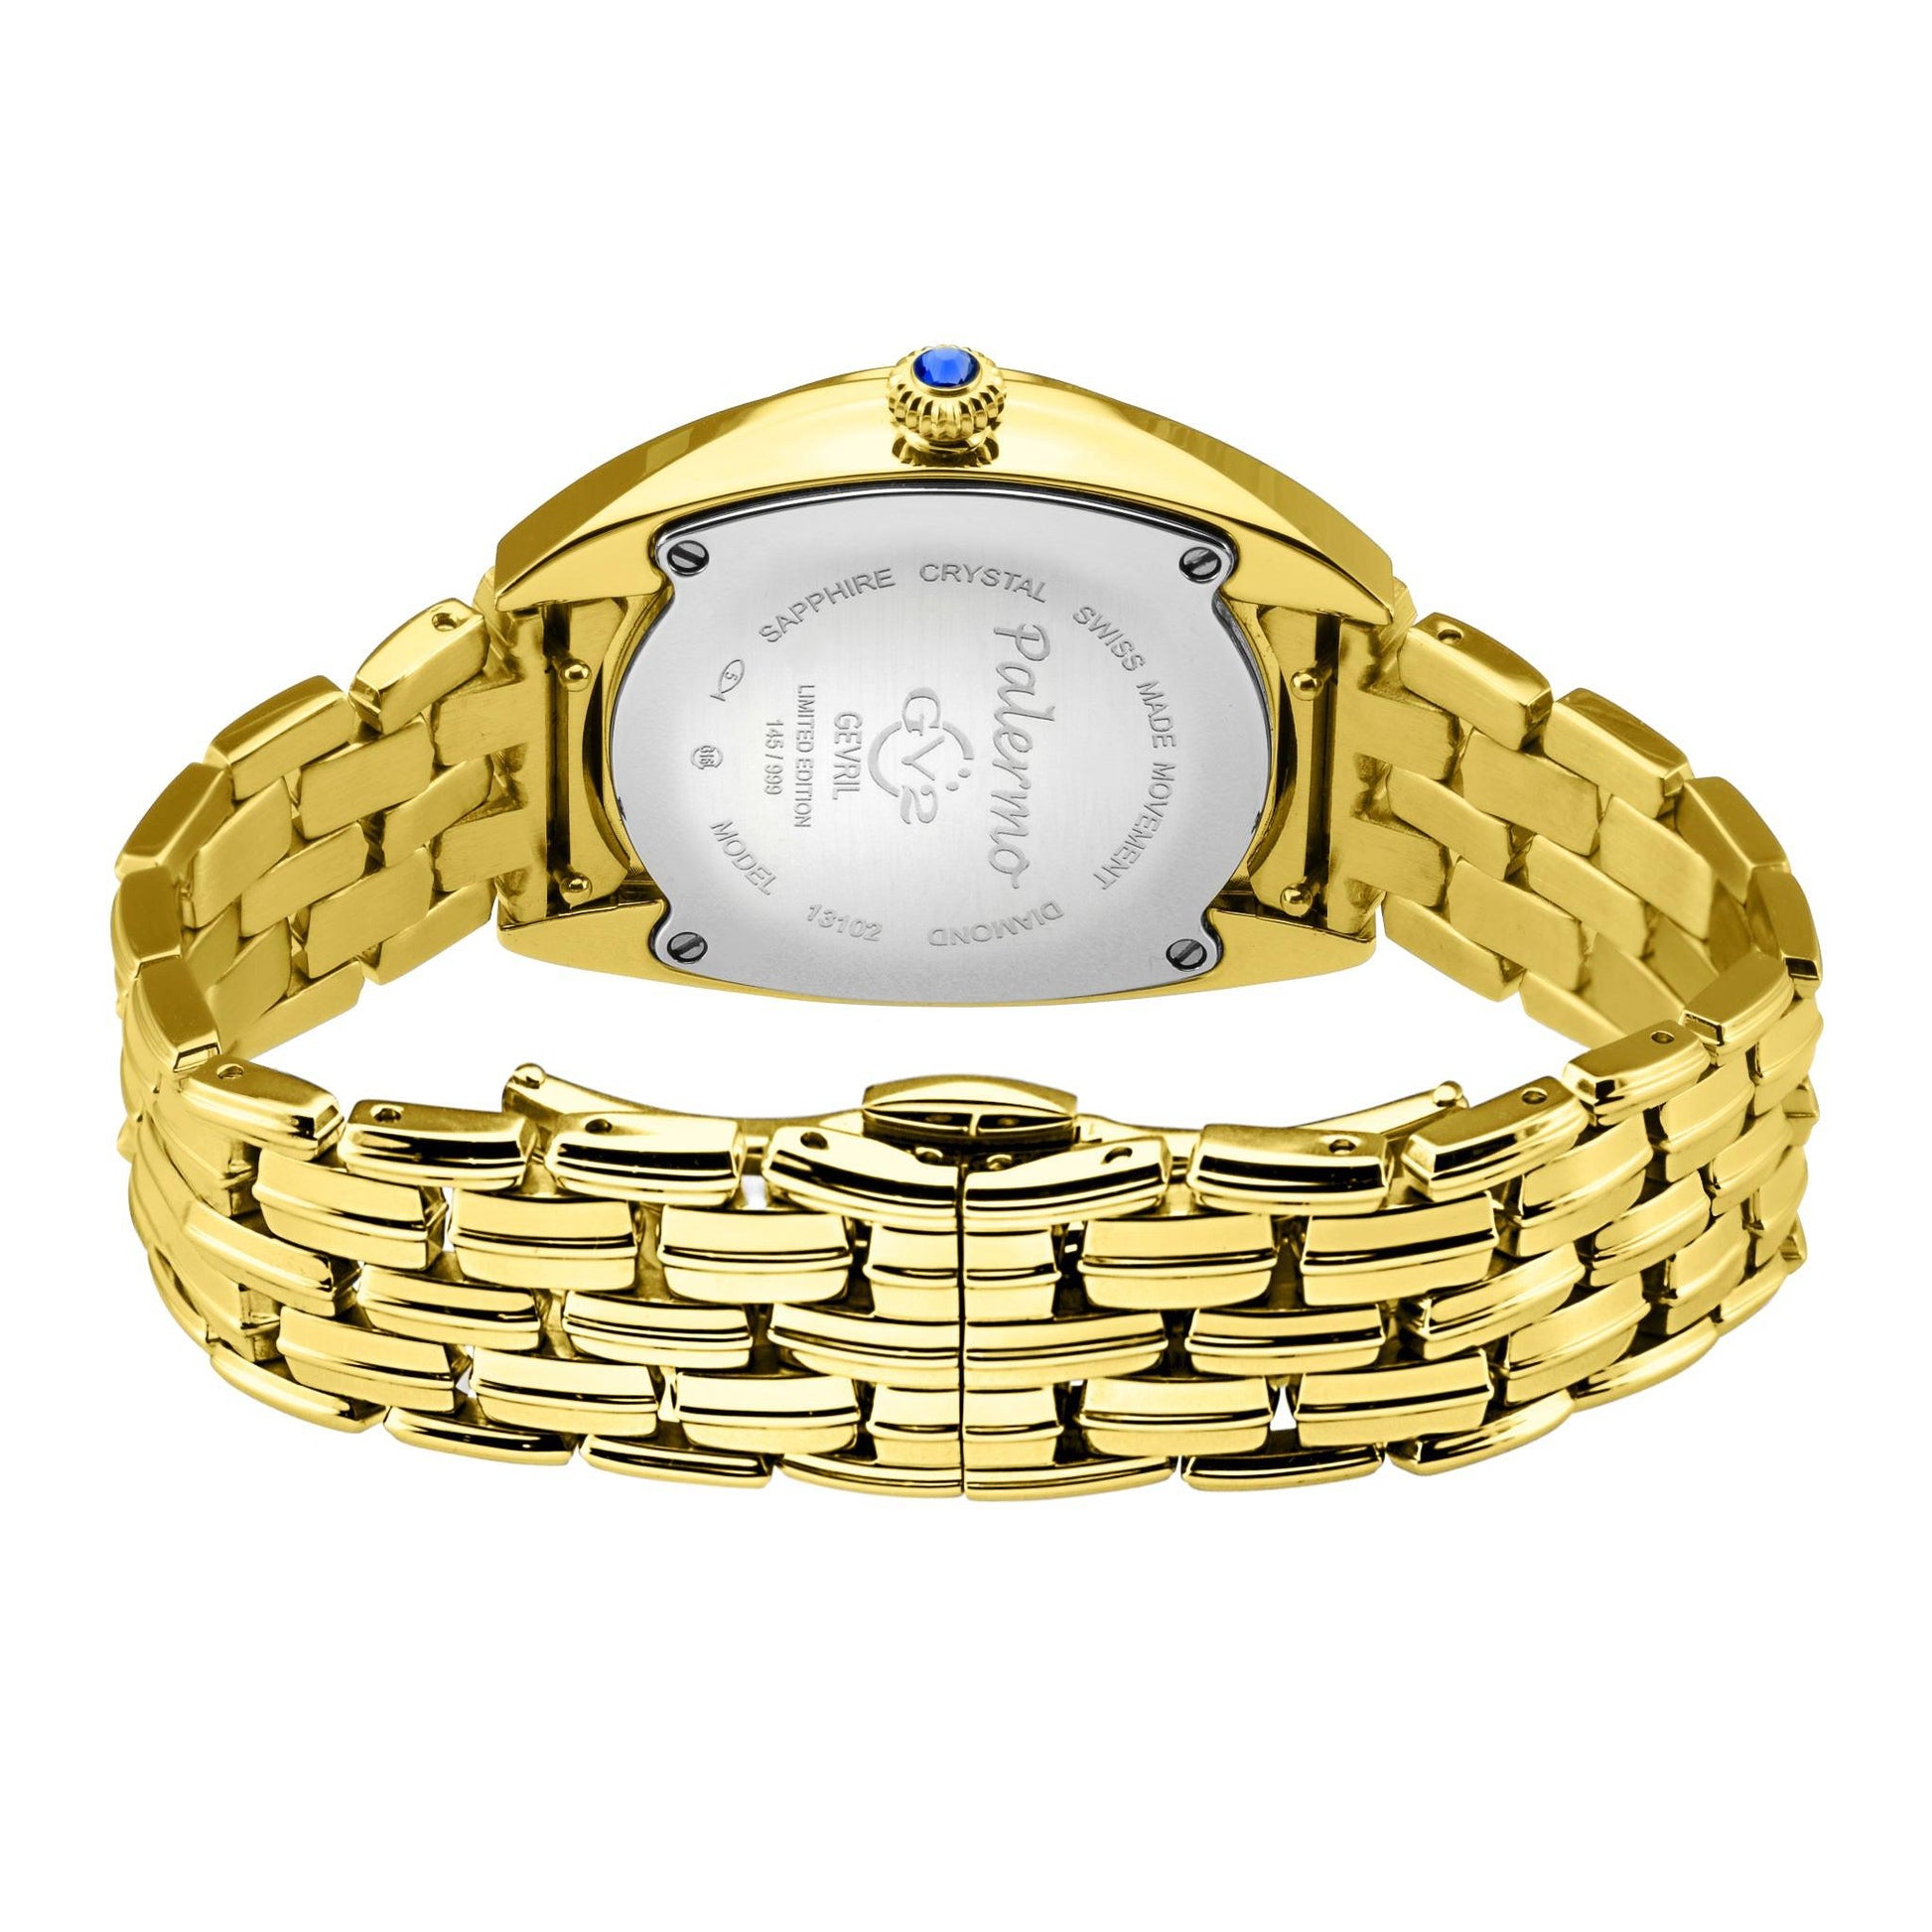 Gevril-Luxury-Swiss-Watches-GV2 Palermo Diamond Gemstone-13102B